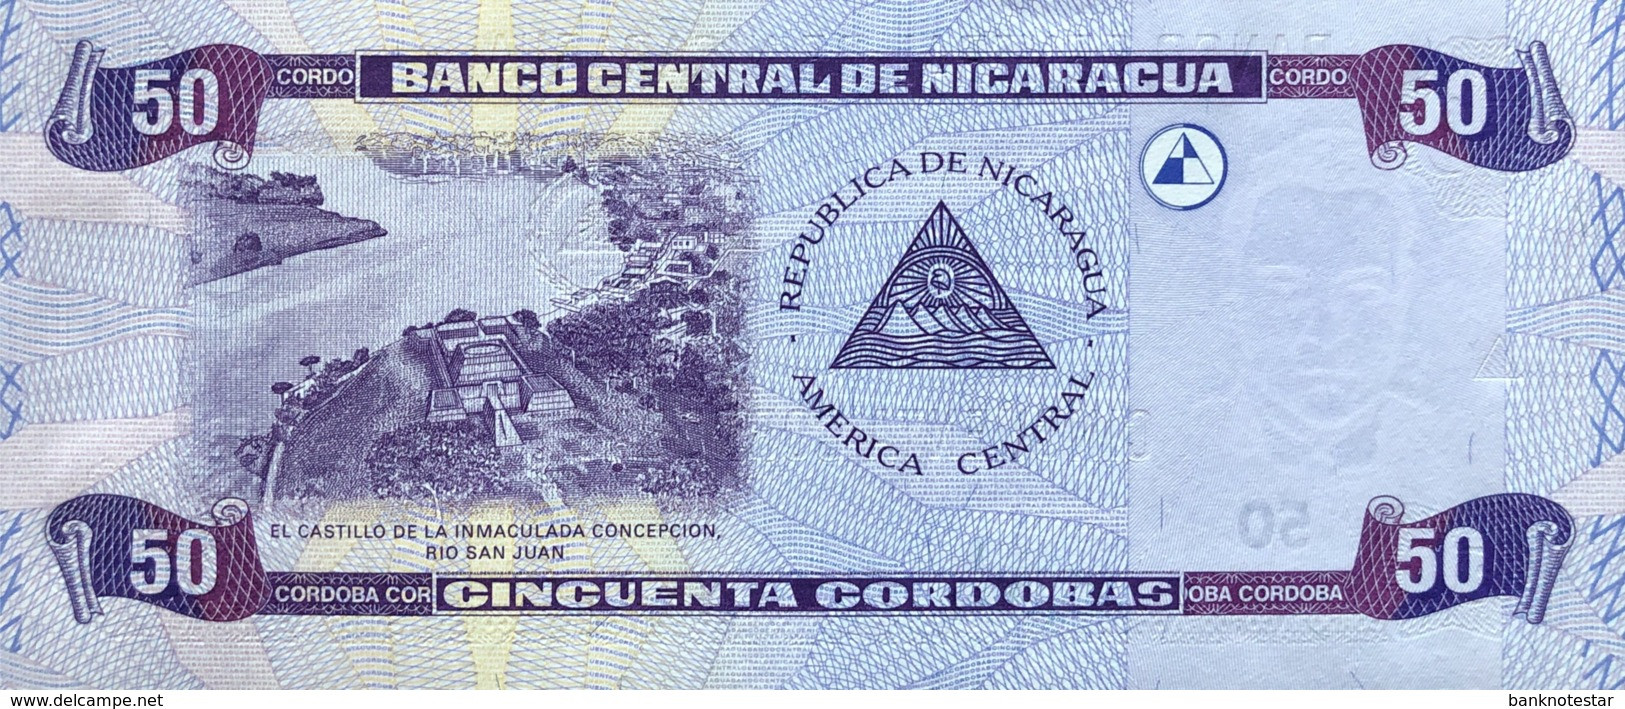 Nicaragua 50 Cordobas, P-193 (2002) - UNC - Serie A - Low Serial Number - Nicaragua